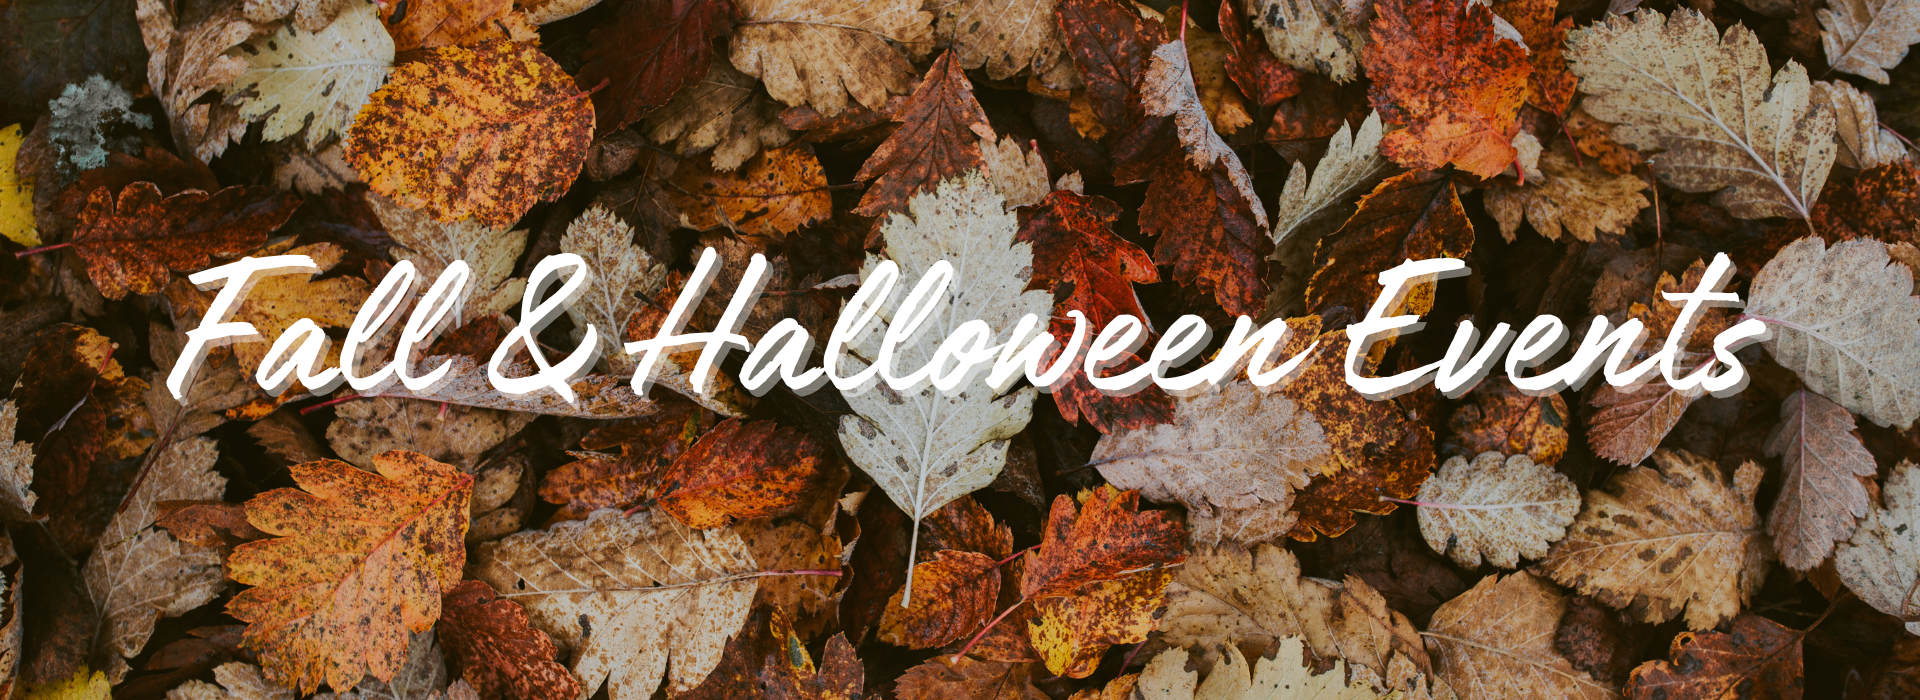 Fall & Halloween Events